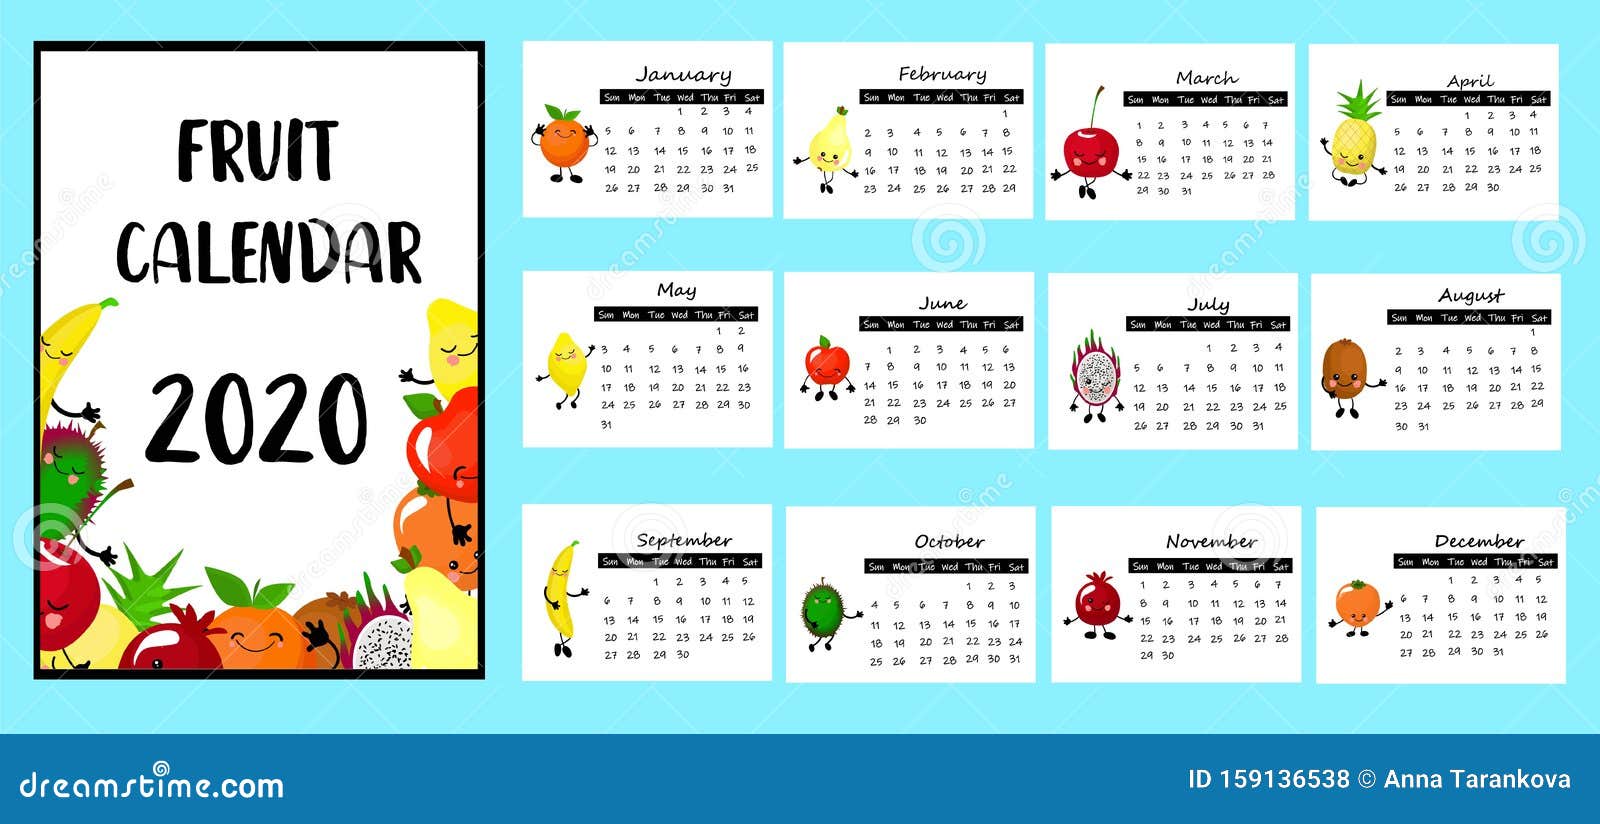 Kalender 2020 Glider For Barn Fruktkalender Funniga Tecken Den Kan Anvandas For Utskrift Arkivfoto Bild Av 159136538